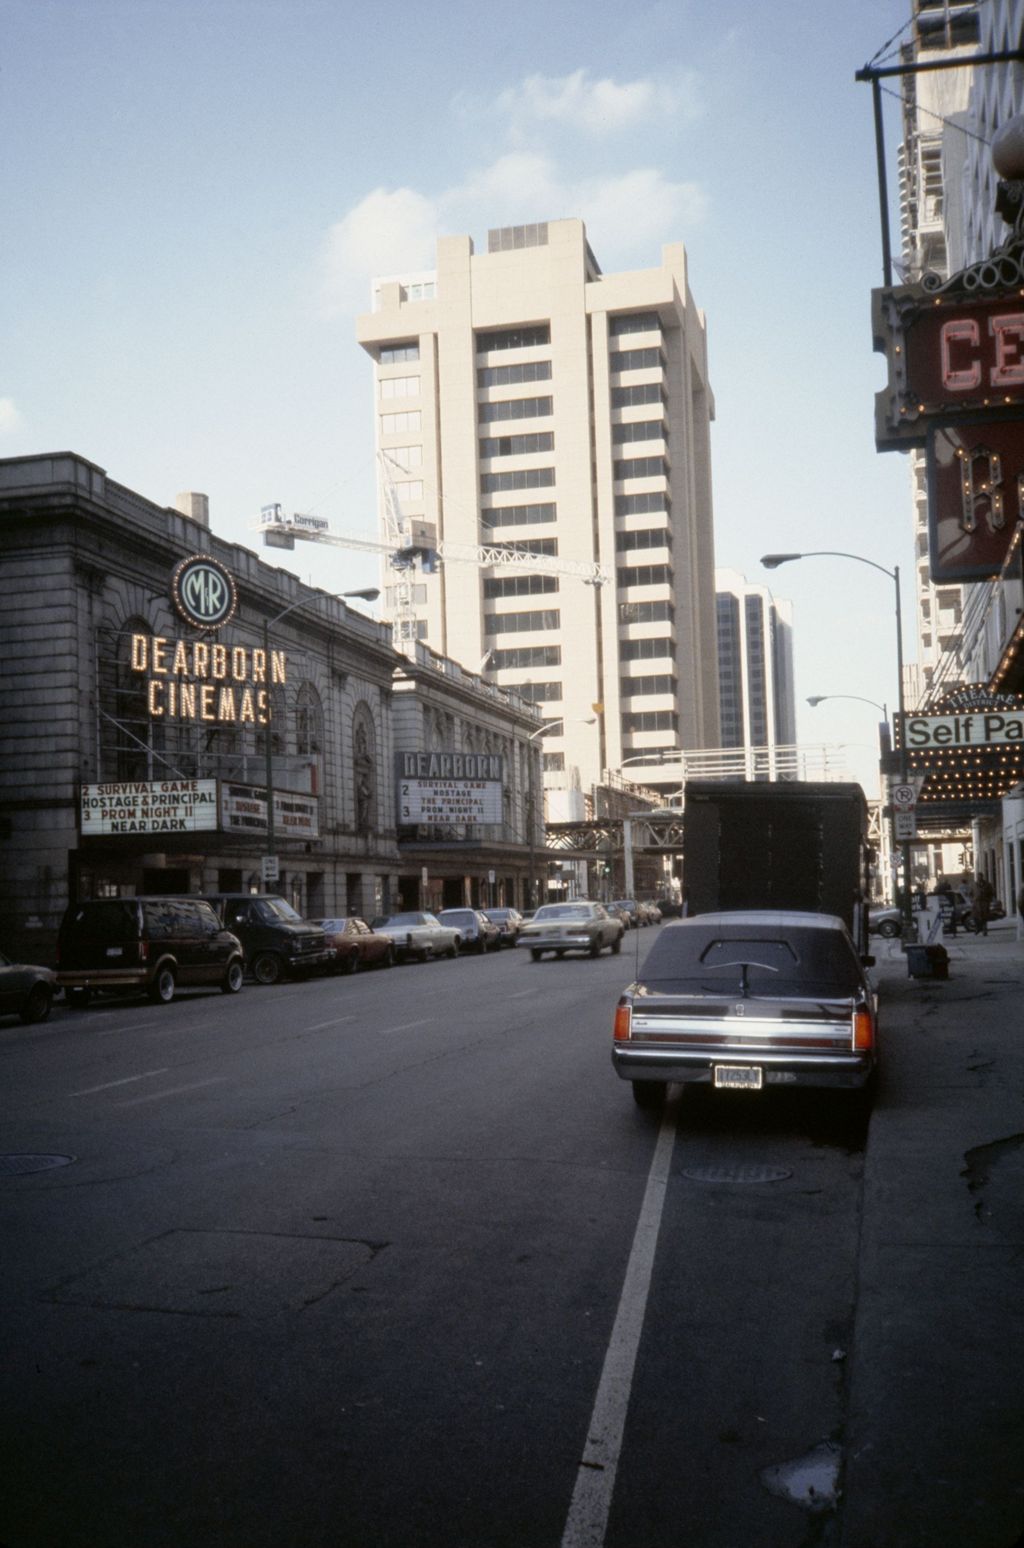 Miniature of Dearborn Street and Dearborn Cinemas